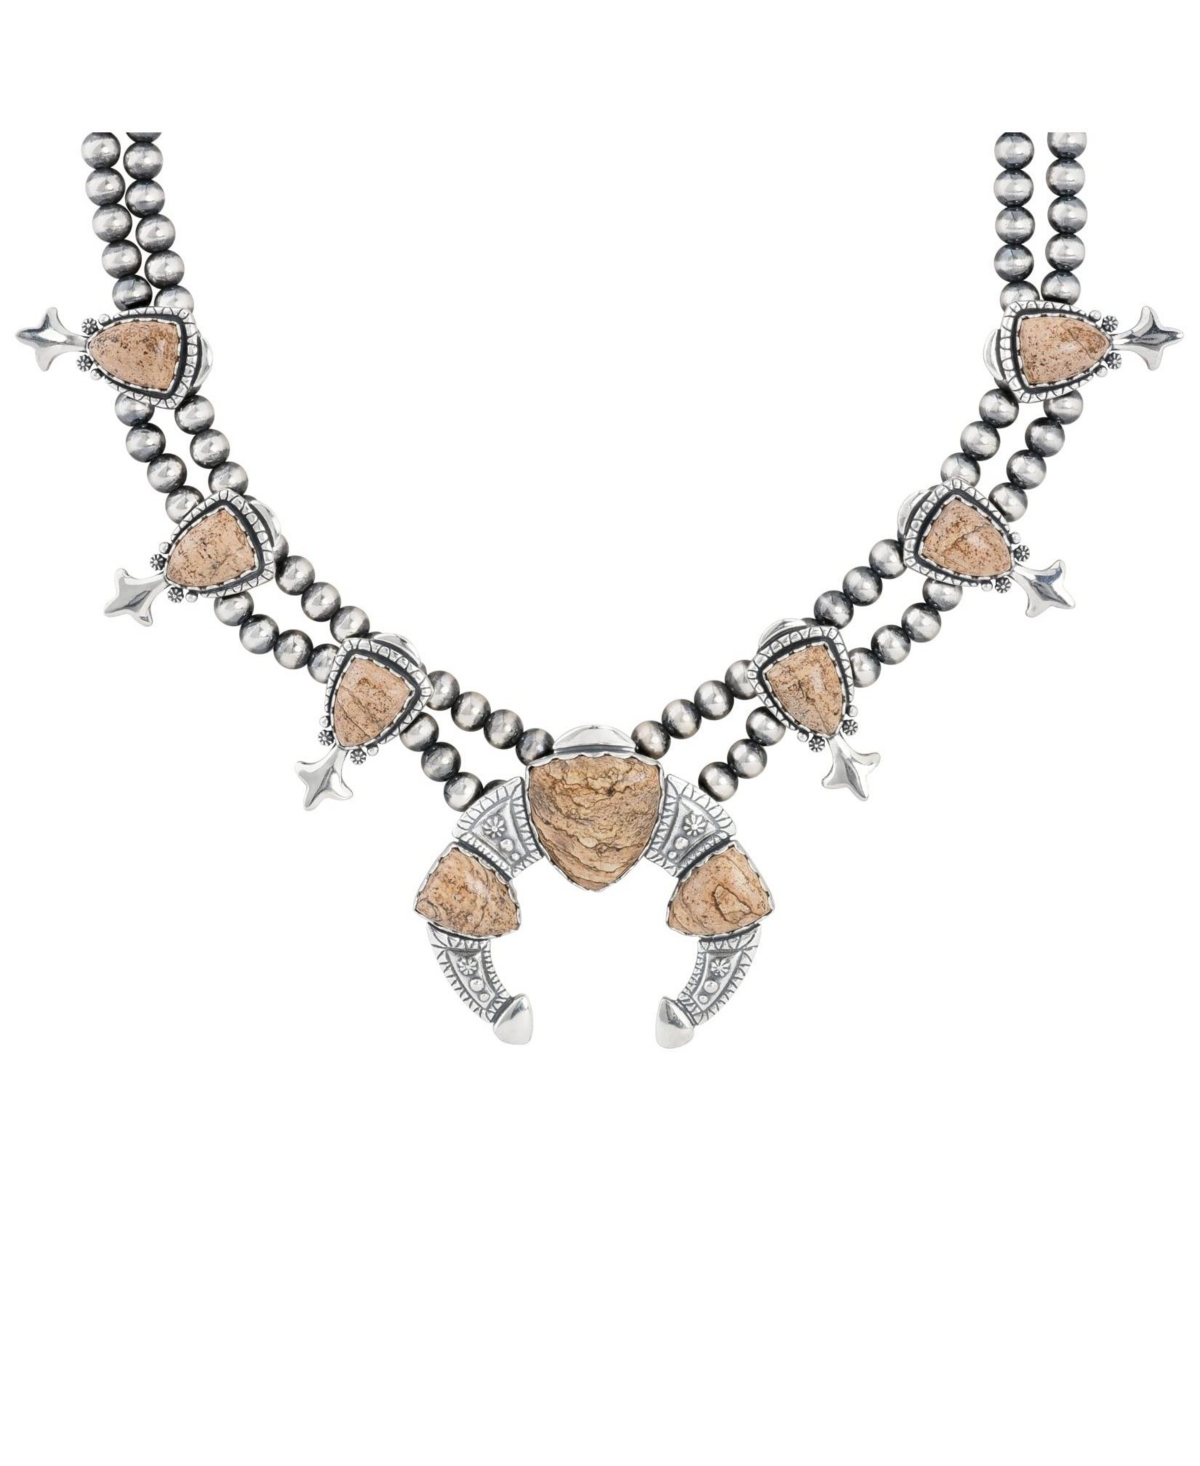 Sterling Silver Women's Genuine Gemstone Squash Blossom Statement Necklace,18 to 21 inches - Picture jasper